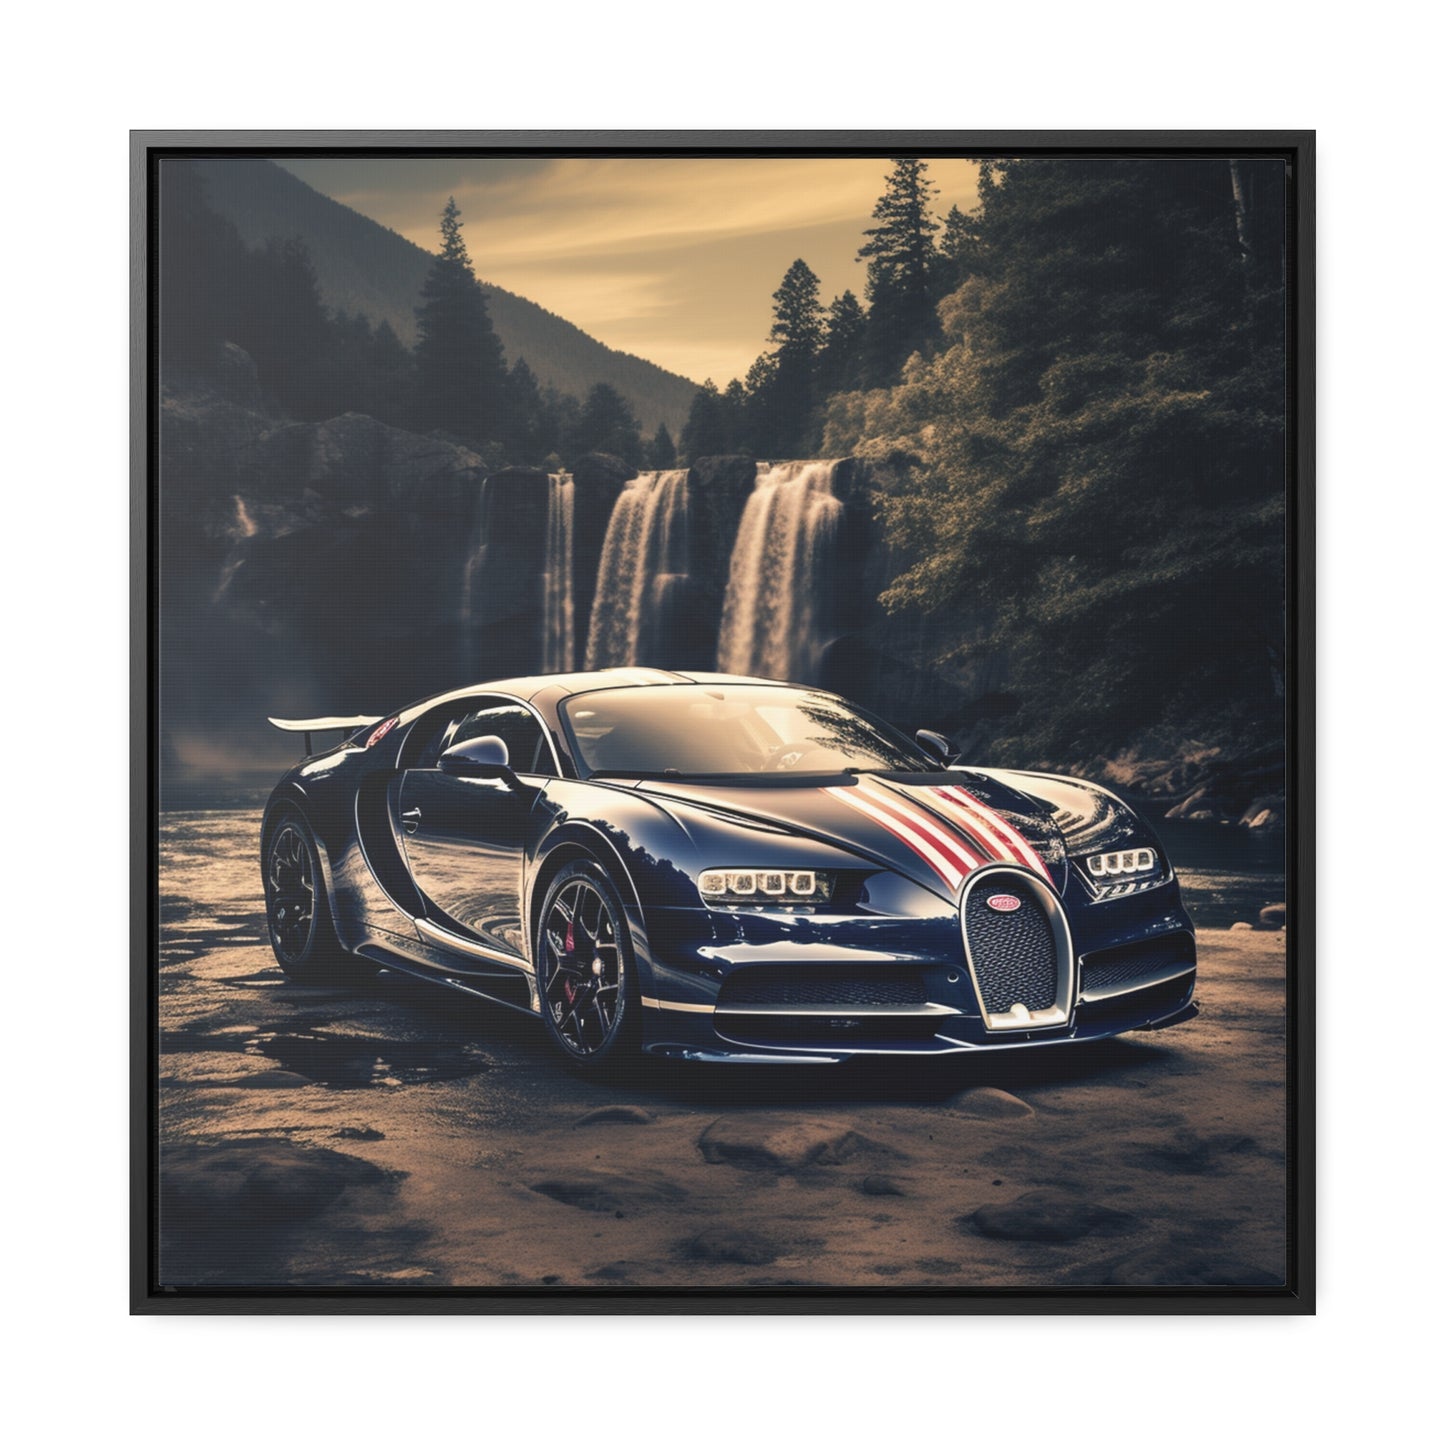 Gallery Canvas Wraps, Square Frame Bugatti Waterfall 2